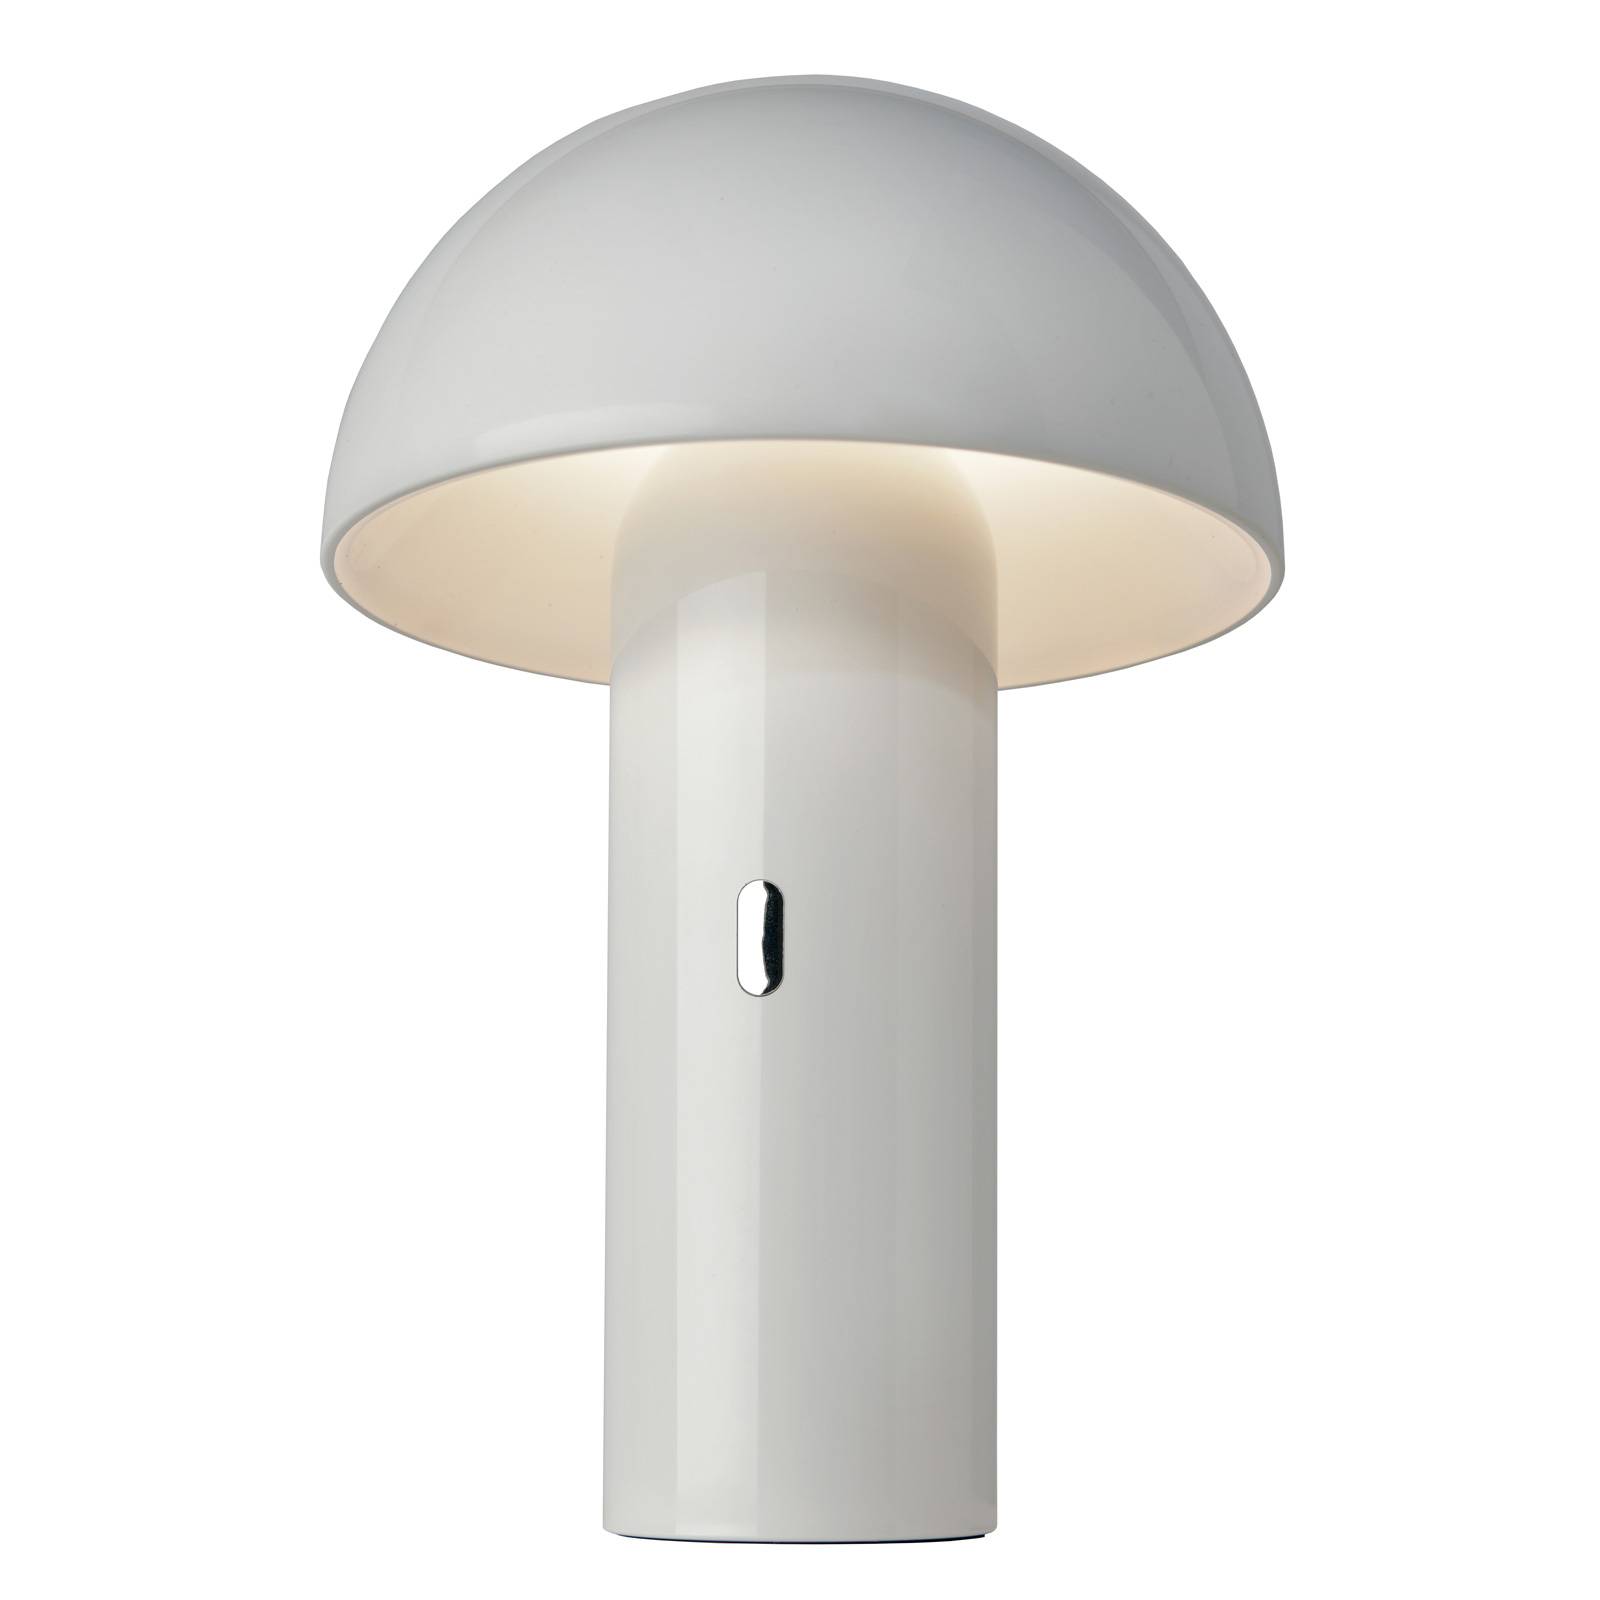 LED tafellamp Svamp met accu, draaibaar, wit